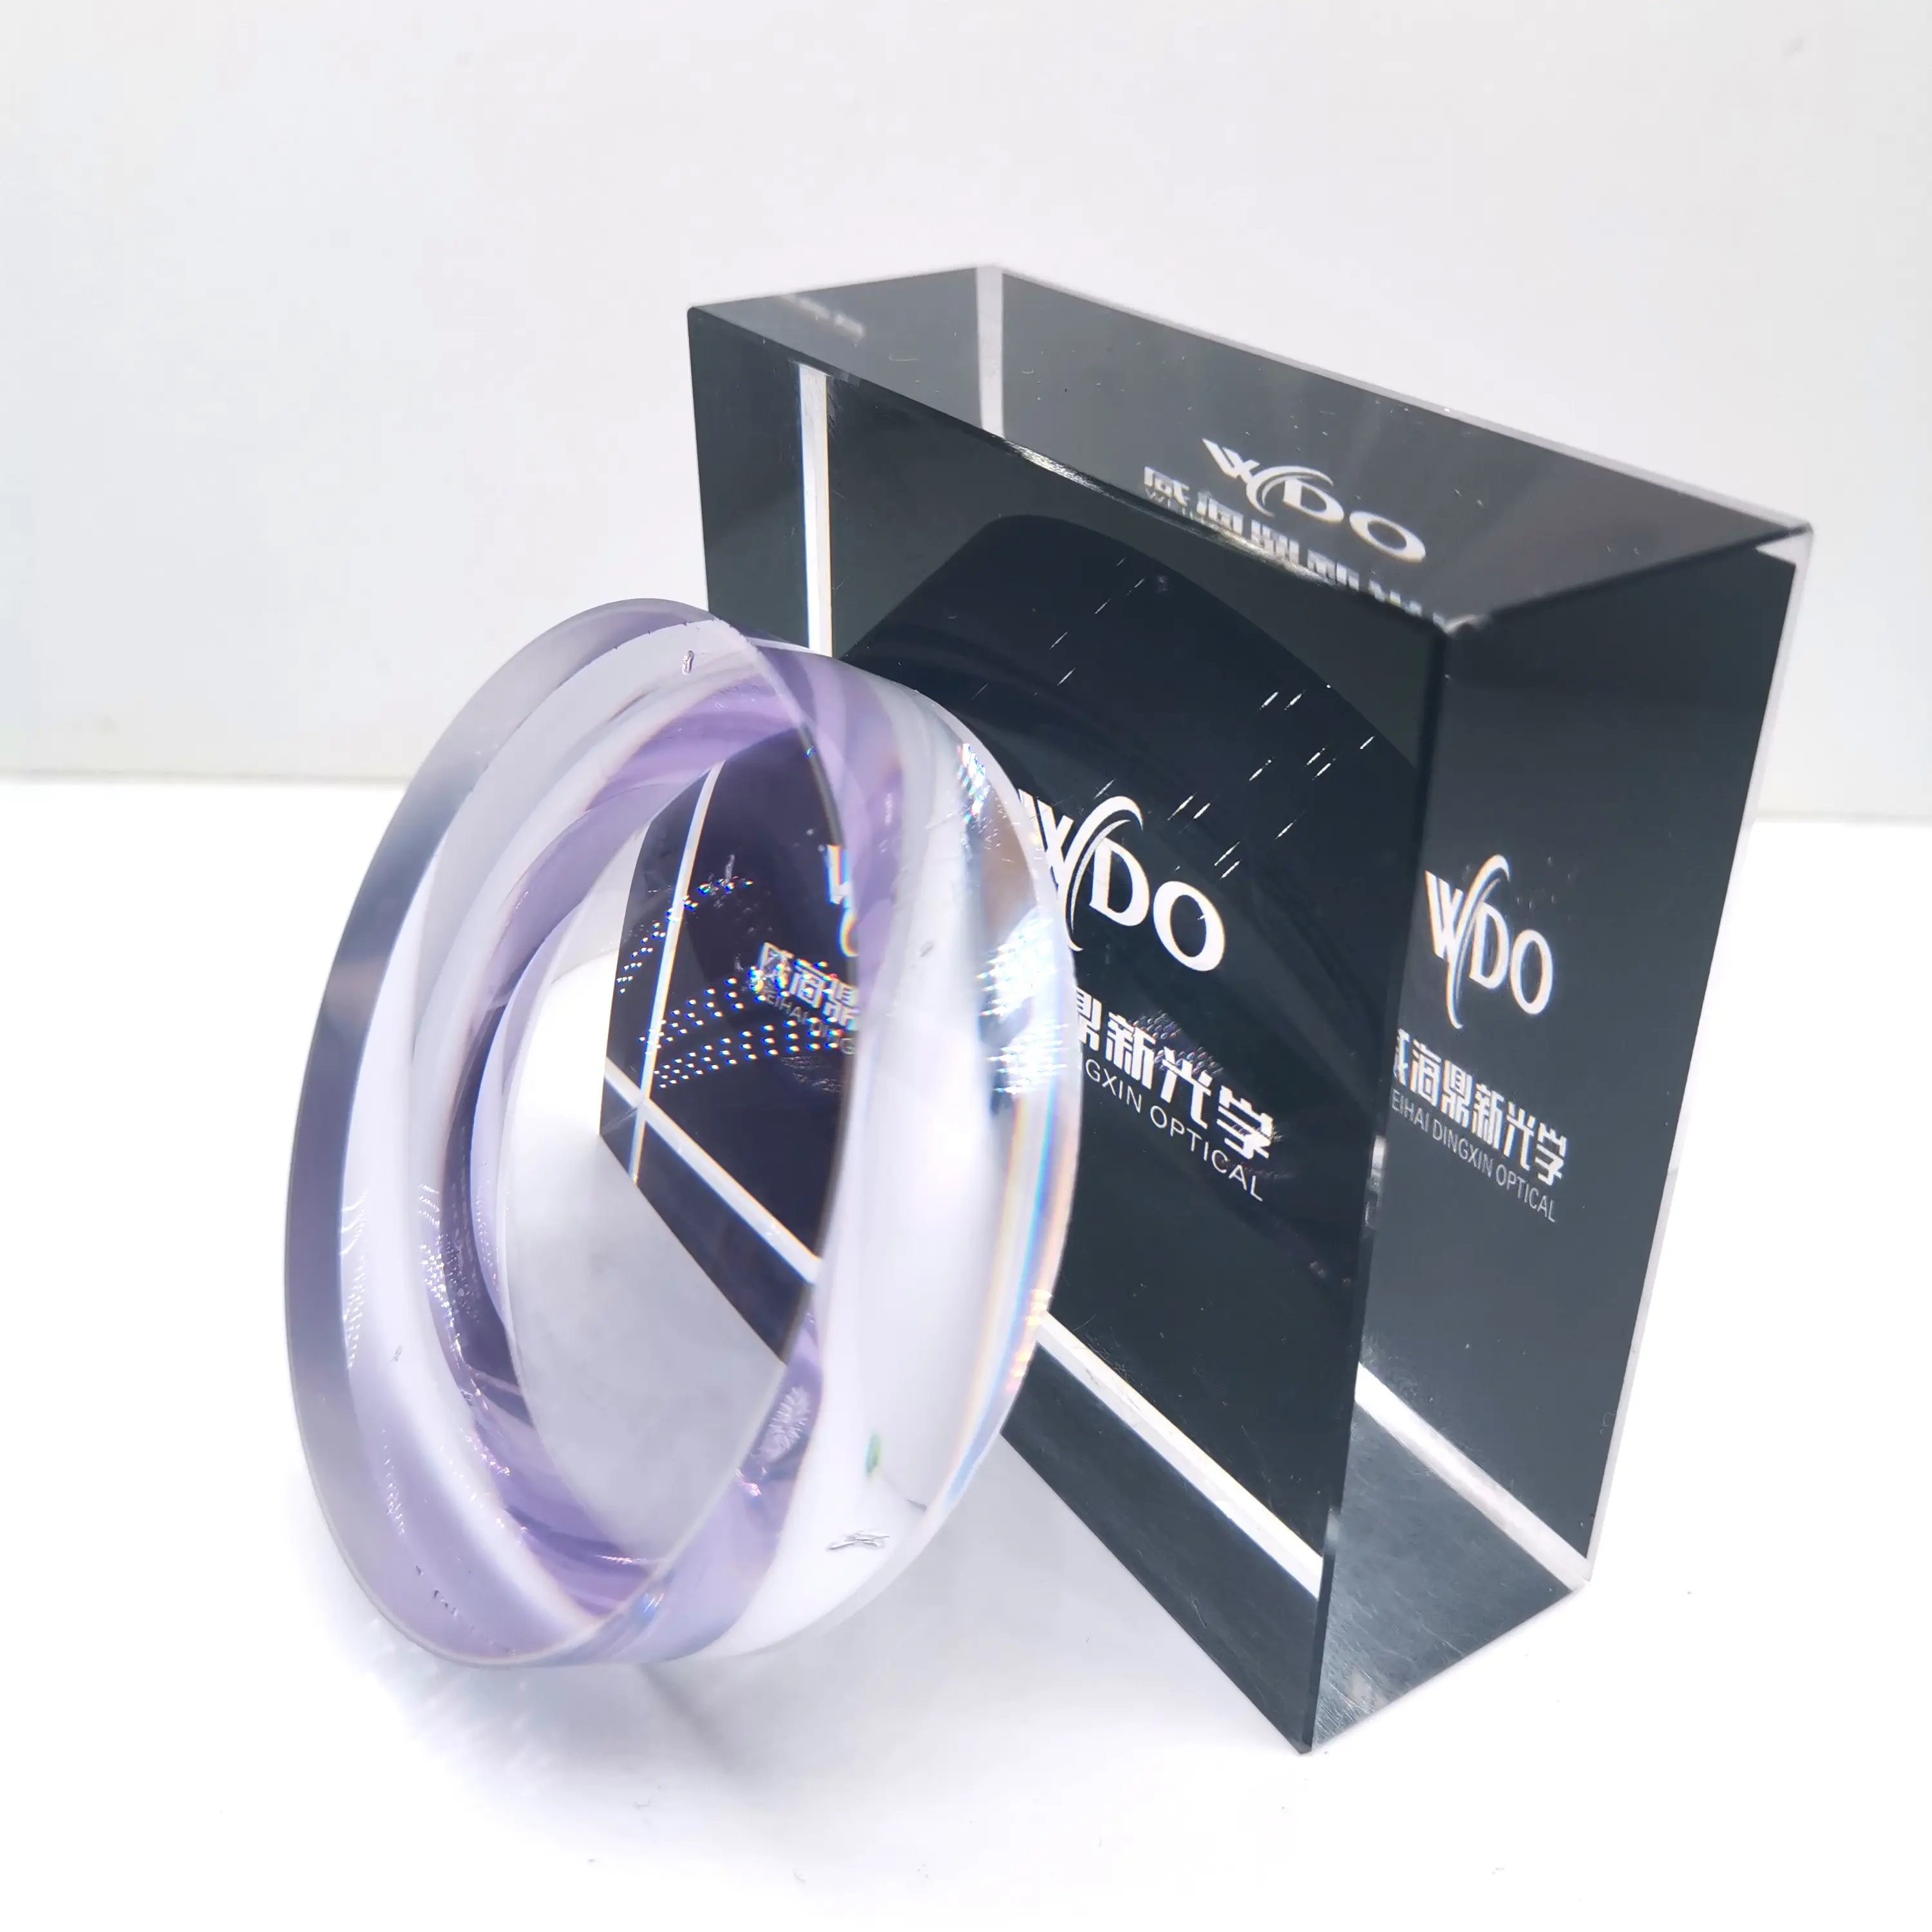 WDO Semi-finished1.74 index optical lens MR-174 lentis single vision lenses PHMC lenses for glasses lens manufacturer